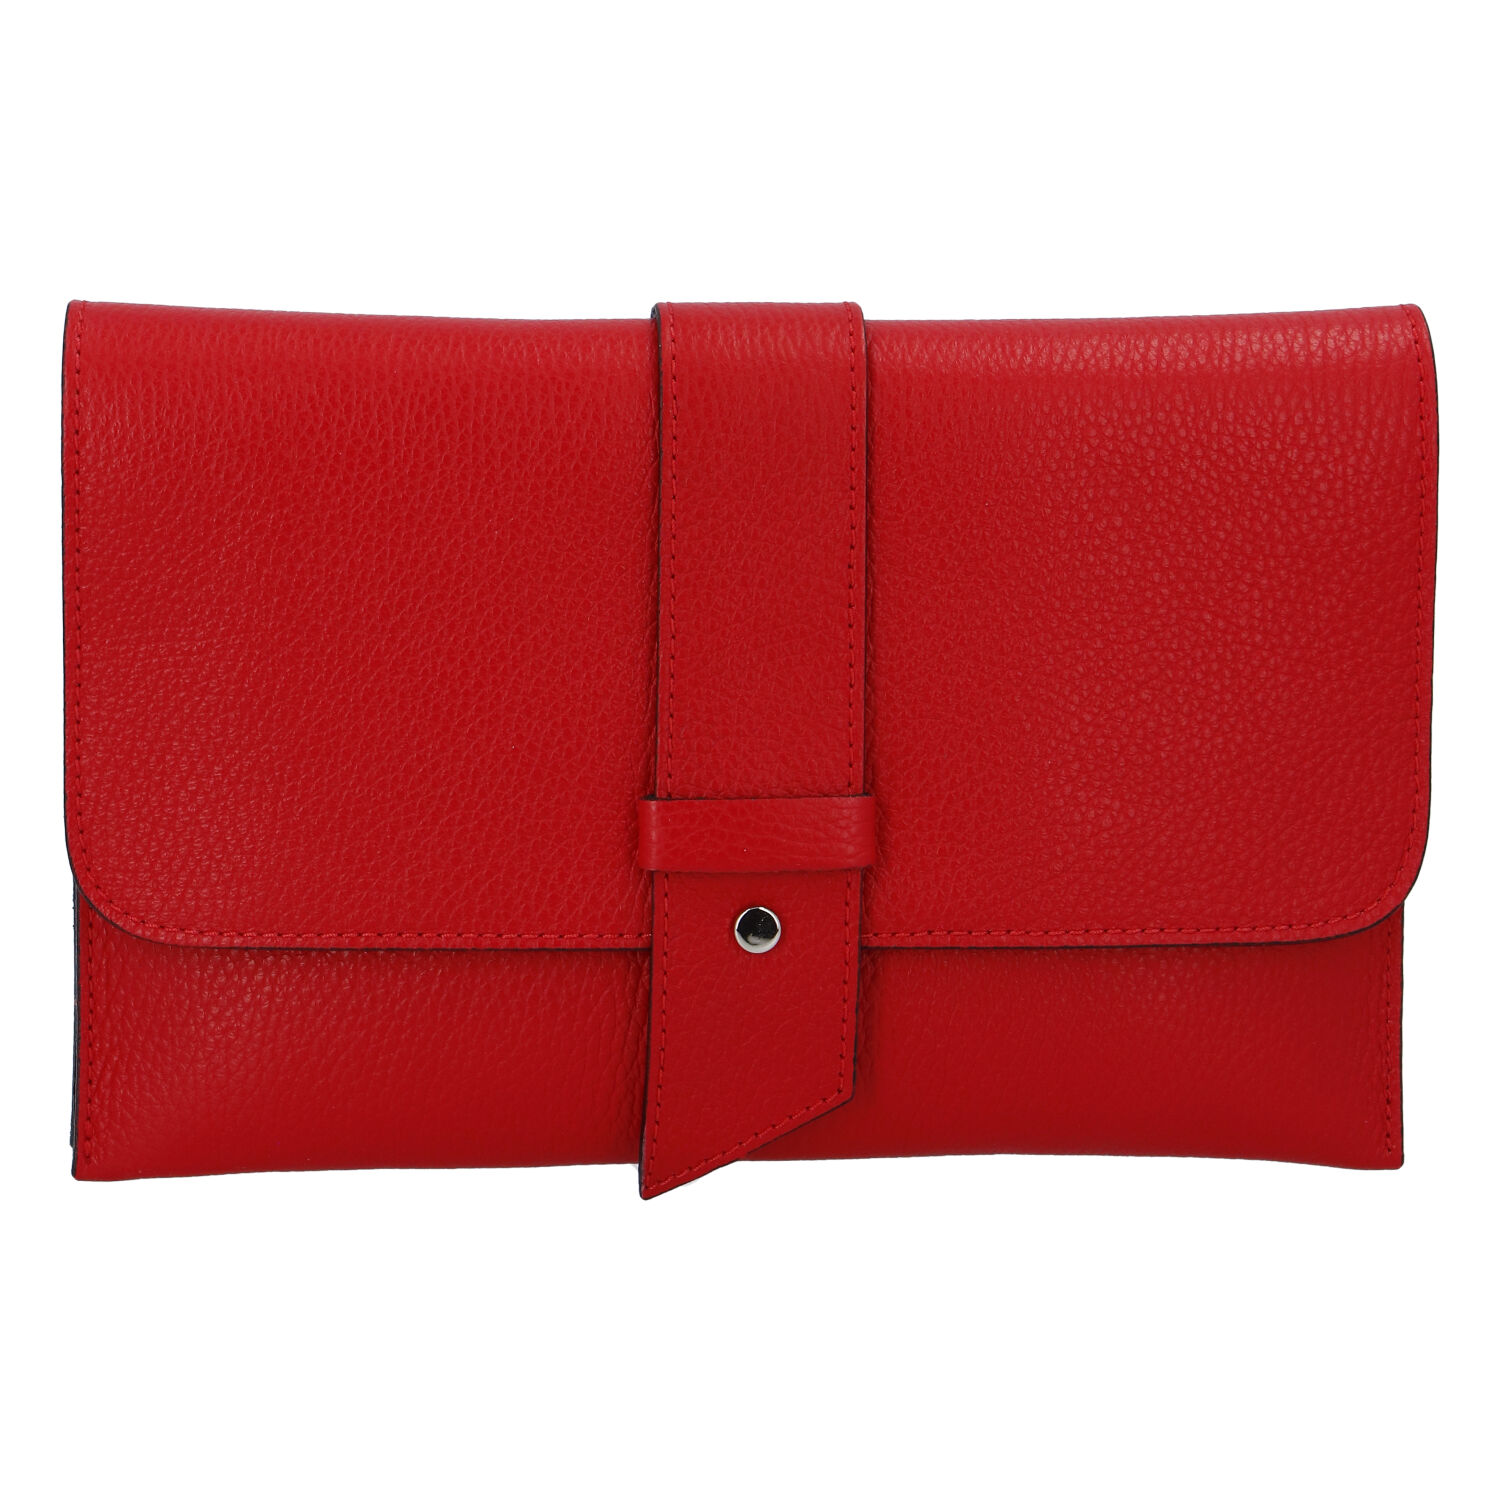 Luxusná dámska kabelka červená - ItalY Brother